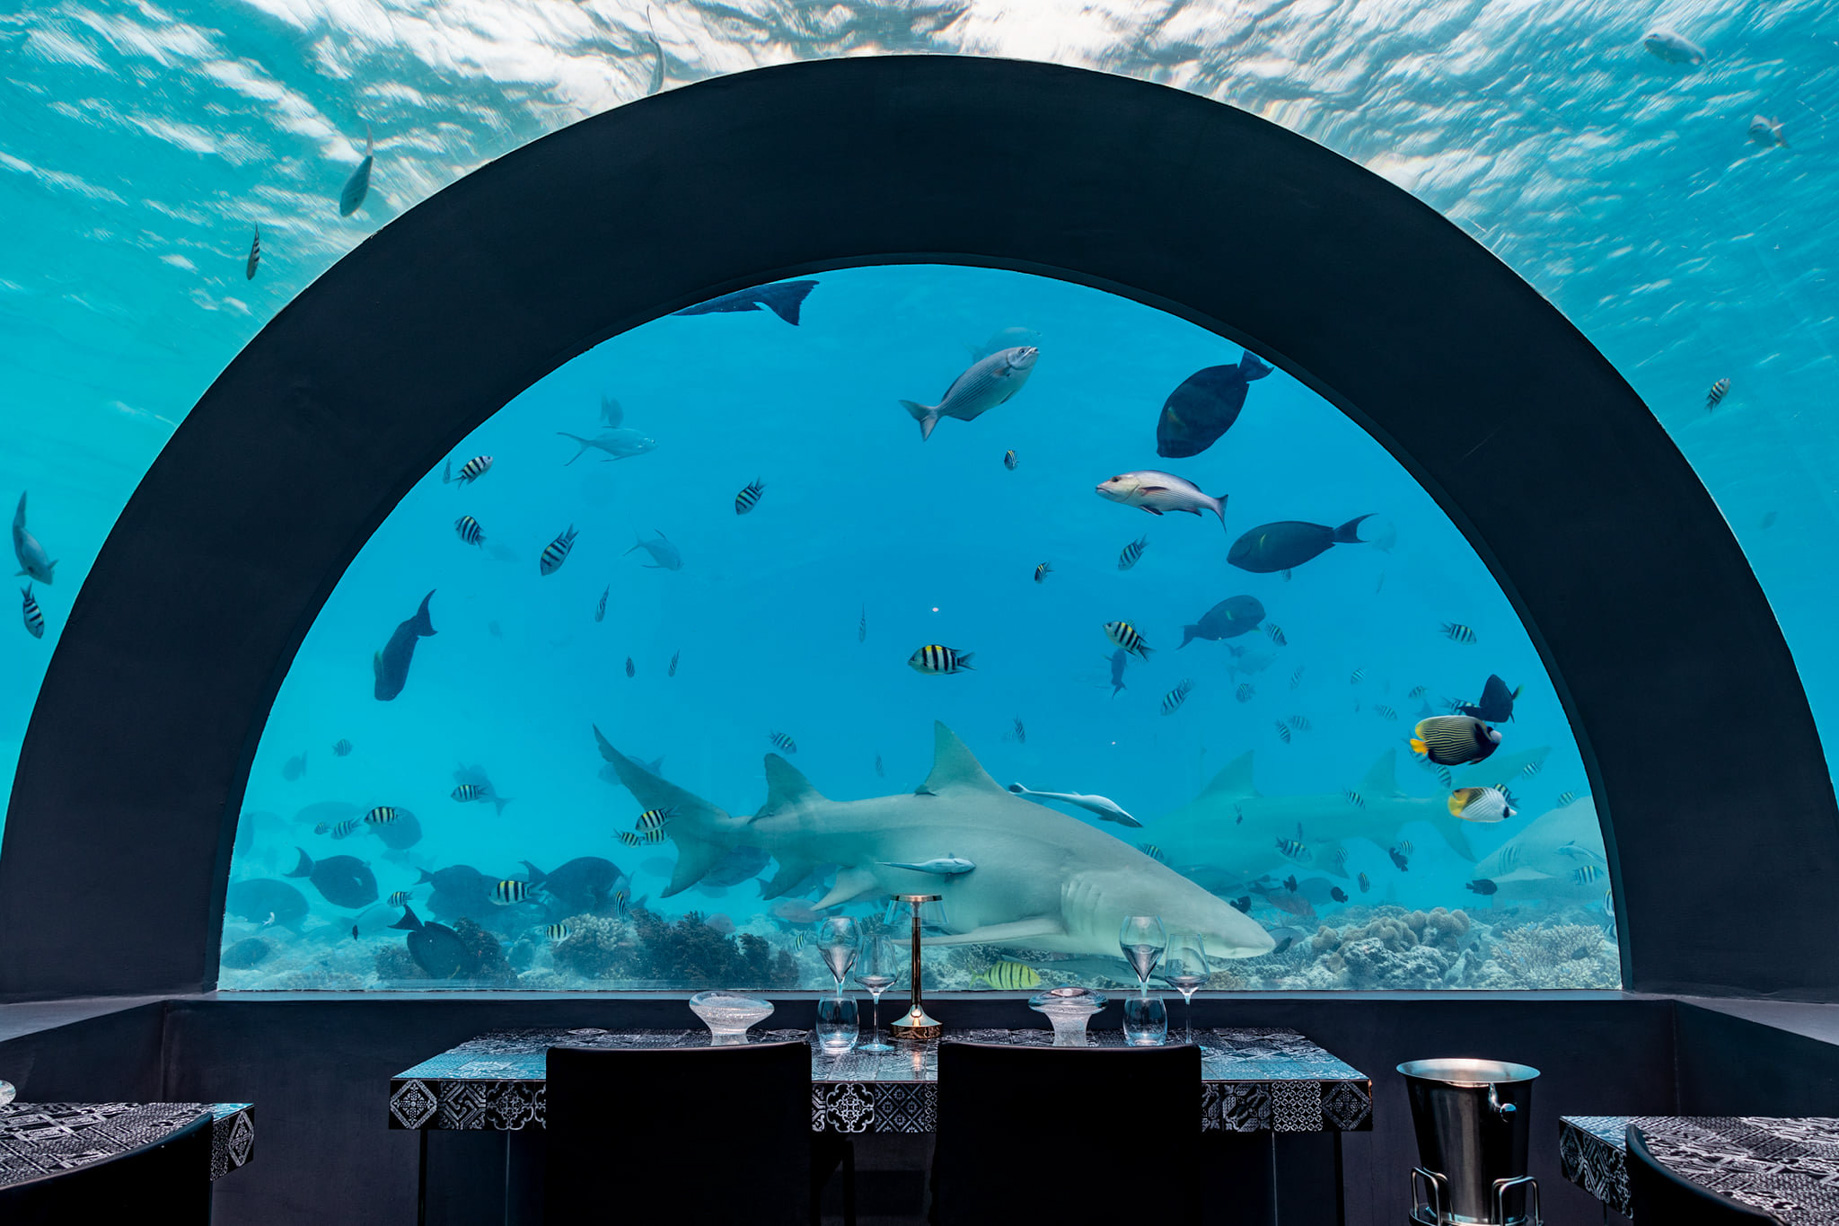 You & Me Maldives Resort – Uthurumaafaru, Raa Atoll, Maldives – H2O Underwater Restaurant by Andrea Berton